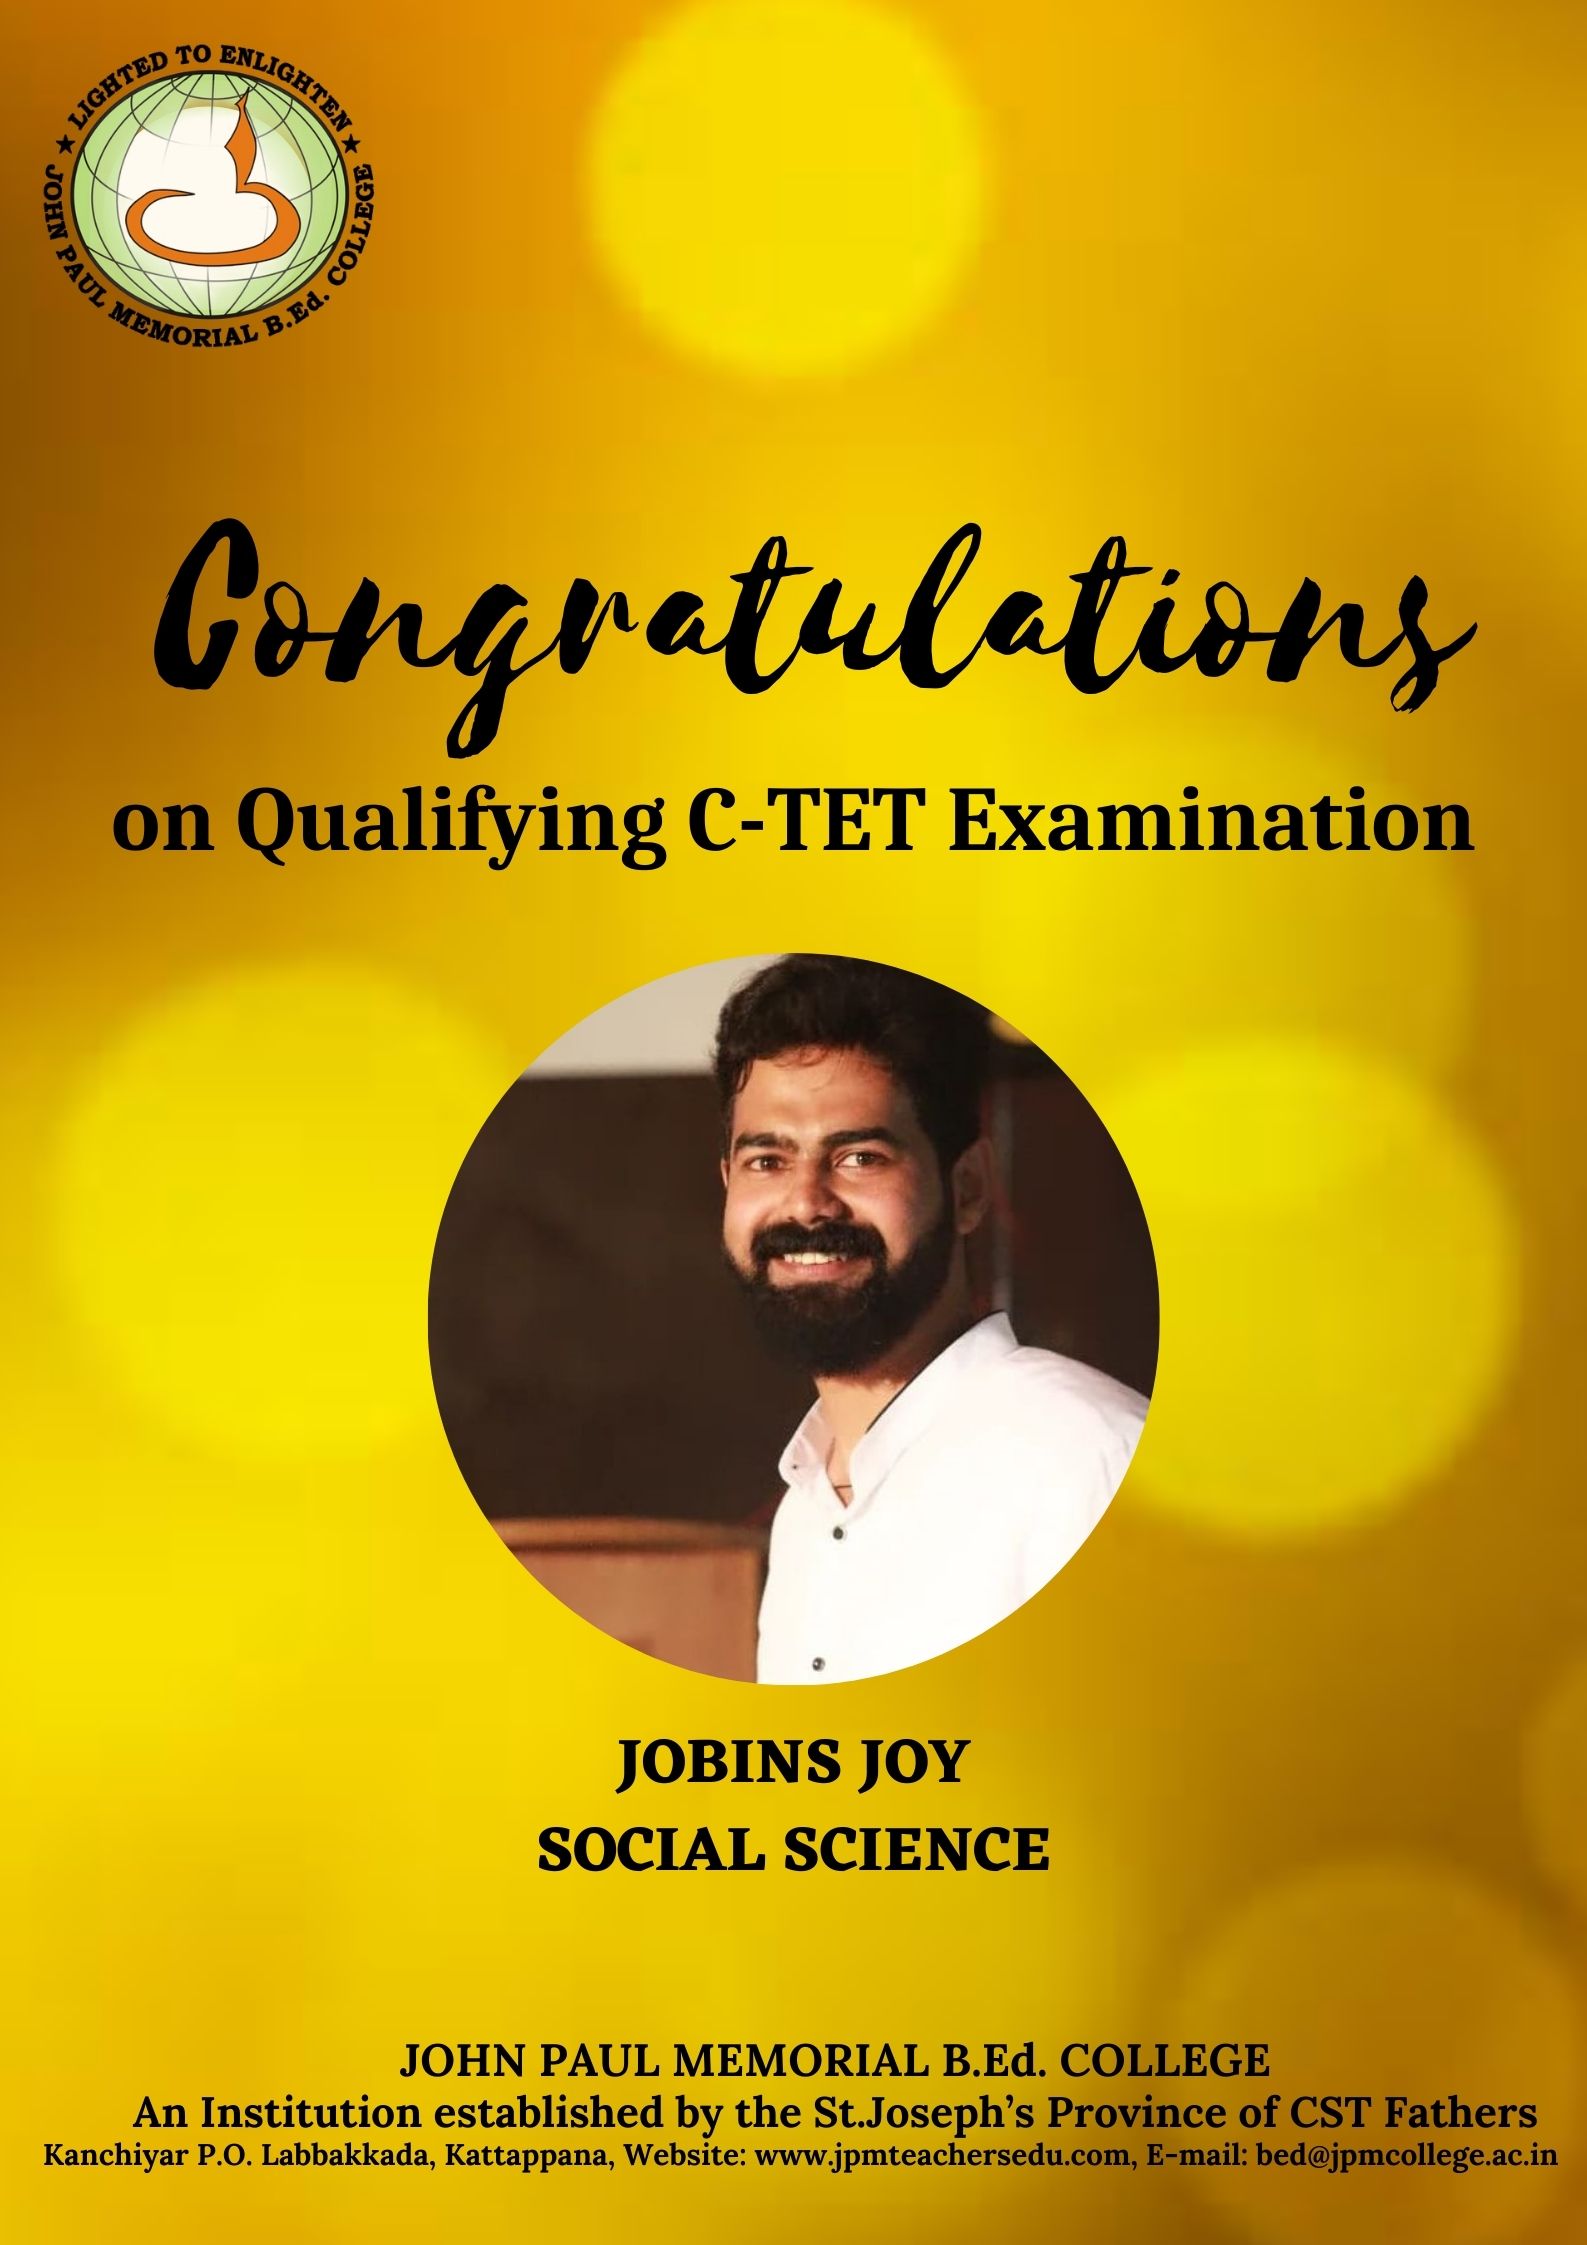 Congratulations on Qualifying C-TET Examination